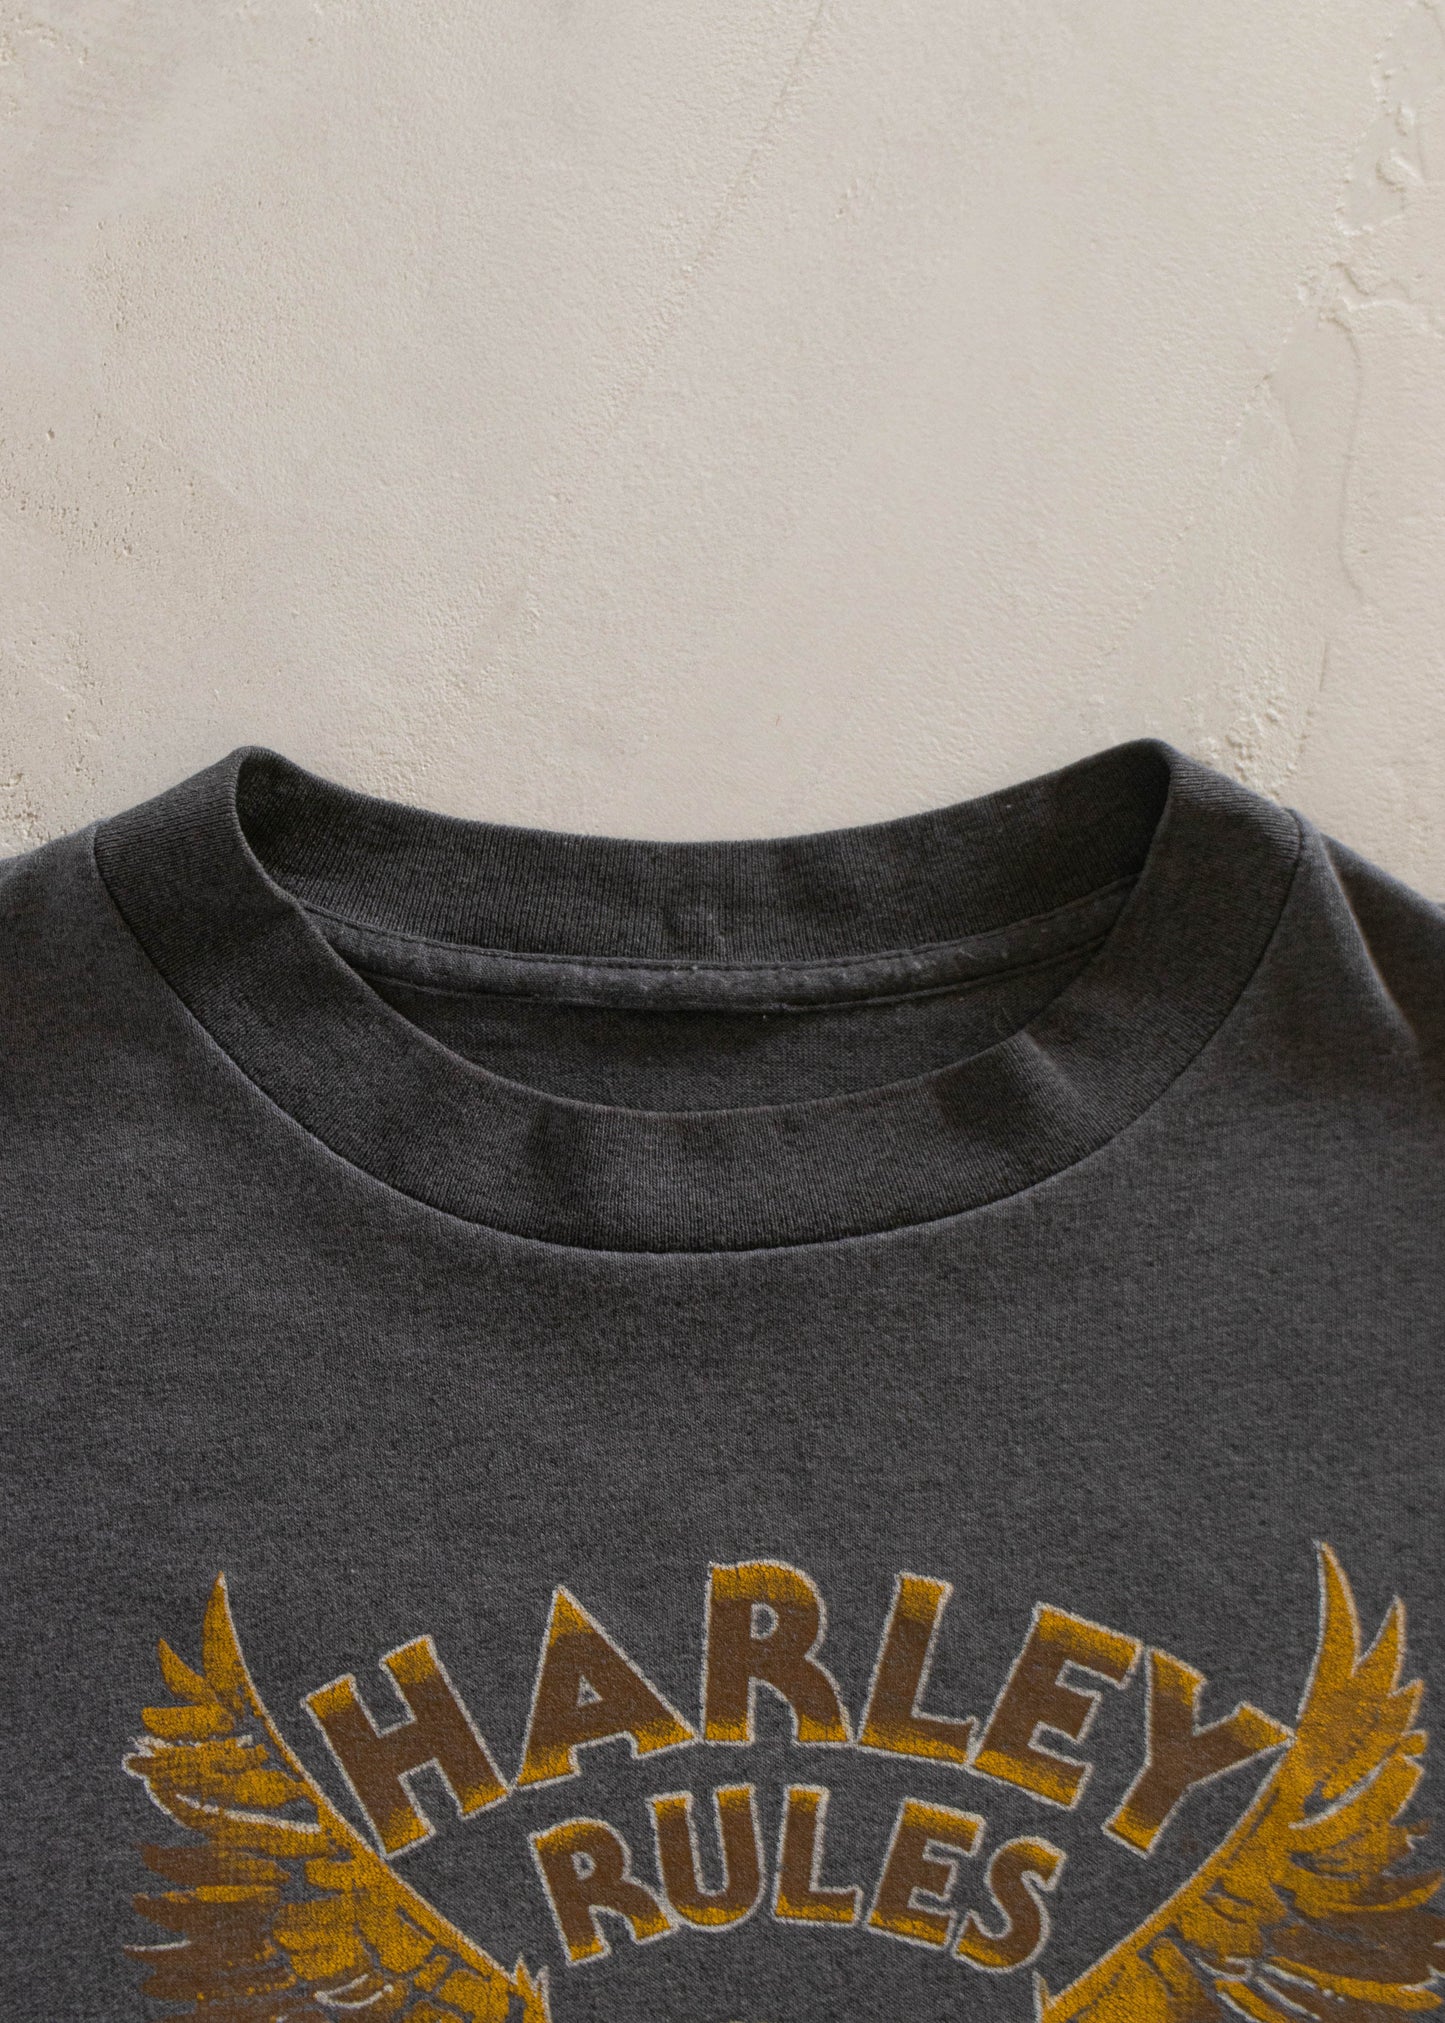 1987 "Harley Rules" Harley Davidson T-Shirt Size M/L